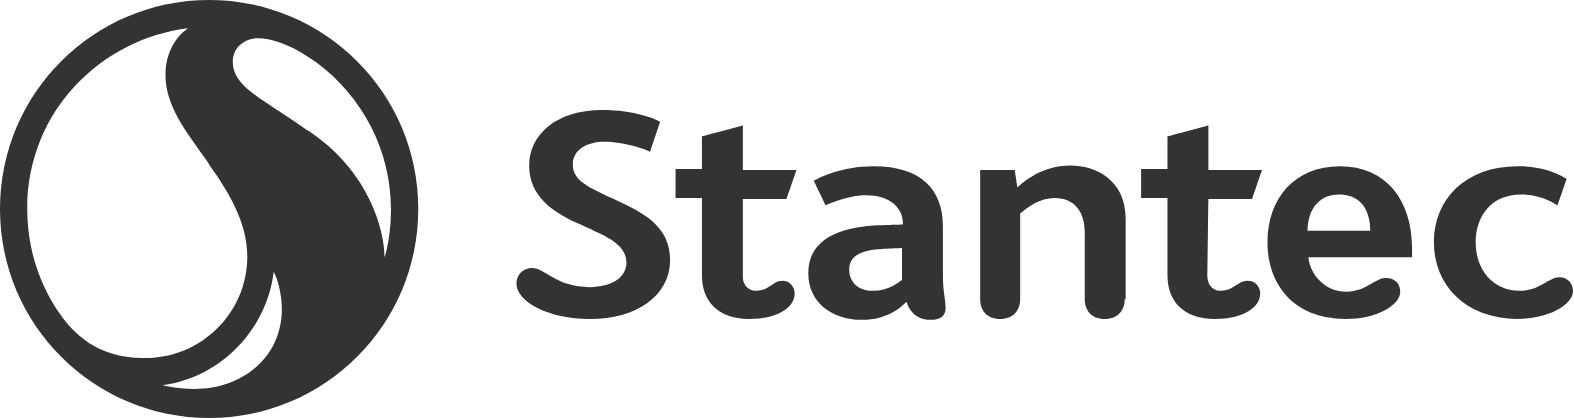 Stantec logo large (transparent PNG)